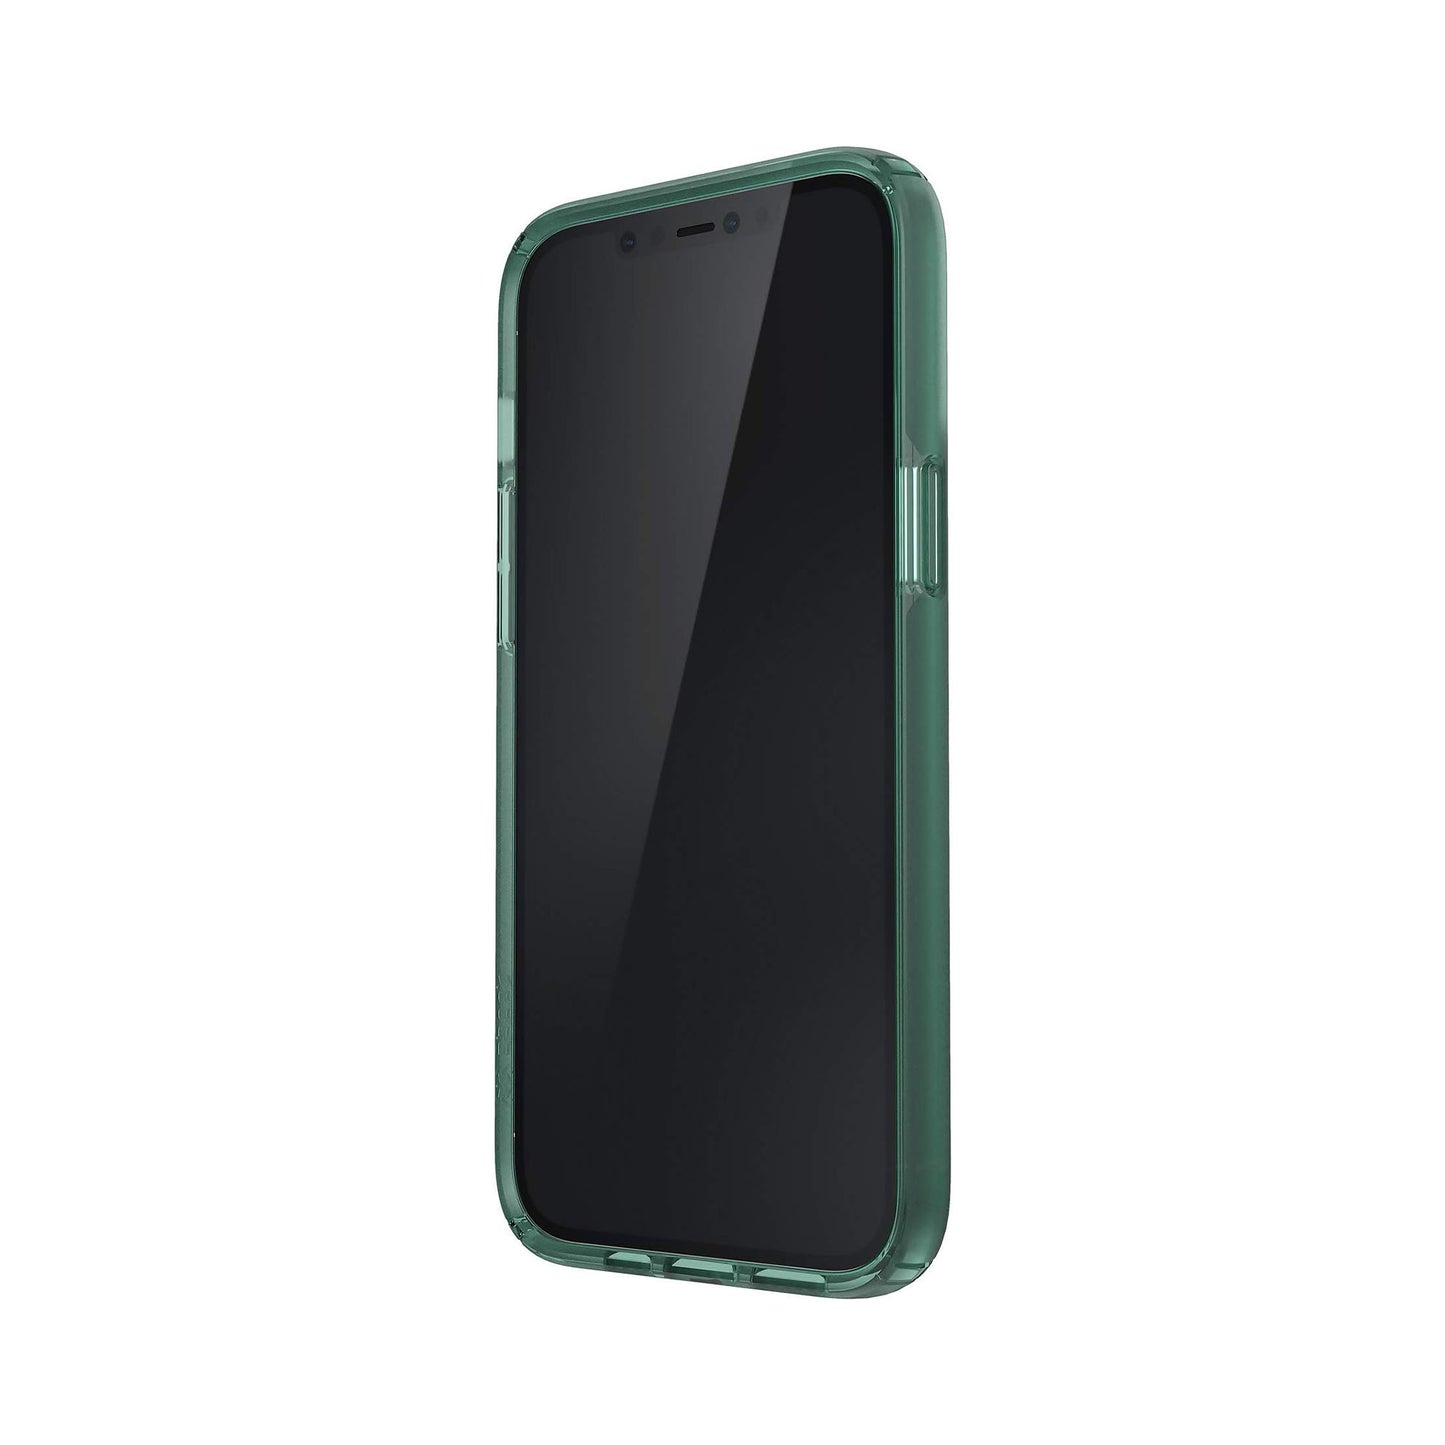 SPECK Presidio Perfect-Mist Case for iPhone 12 Pro Max - Fern Green/Fern Green